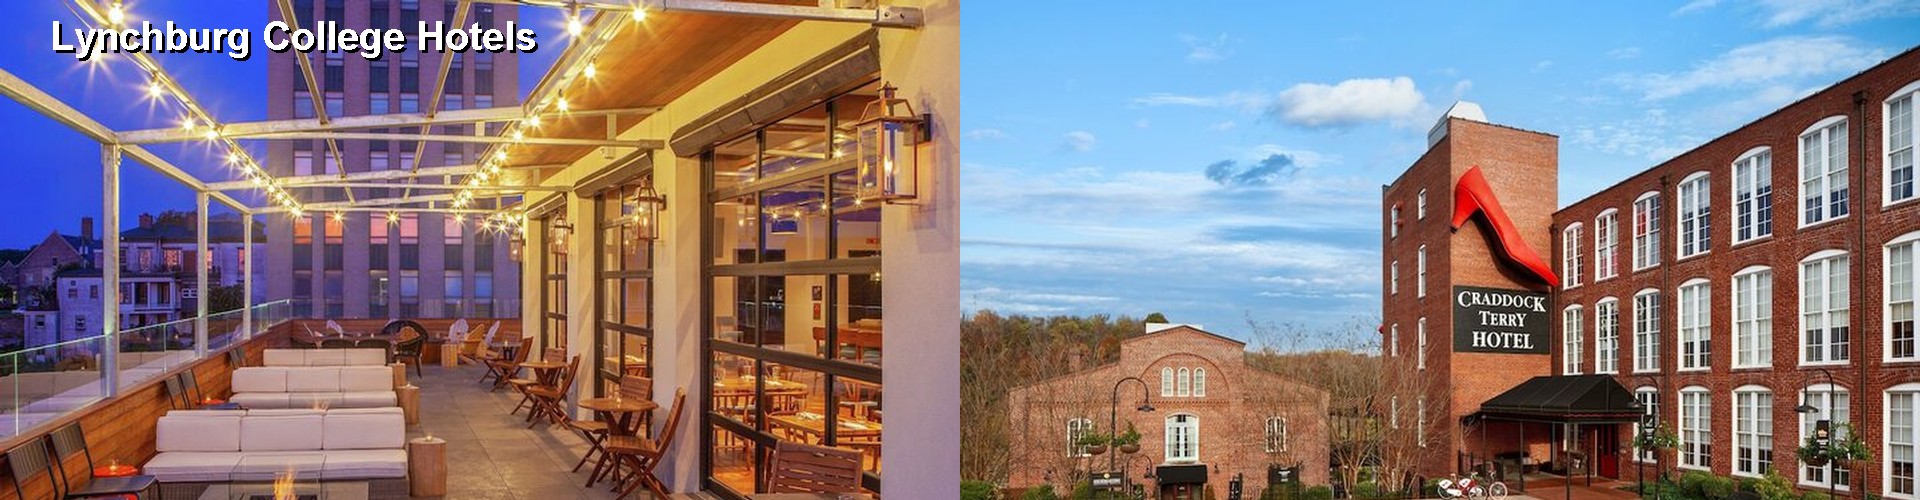 4 Best Hotels near Lynchburg College